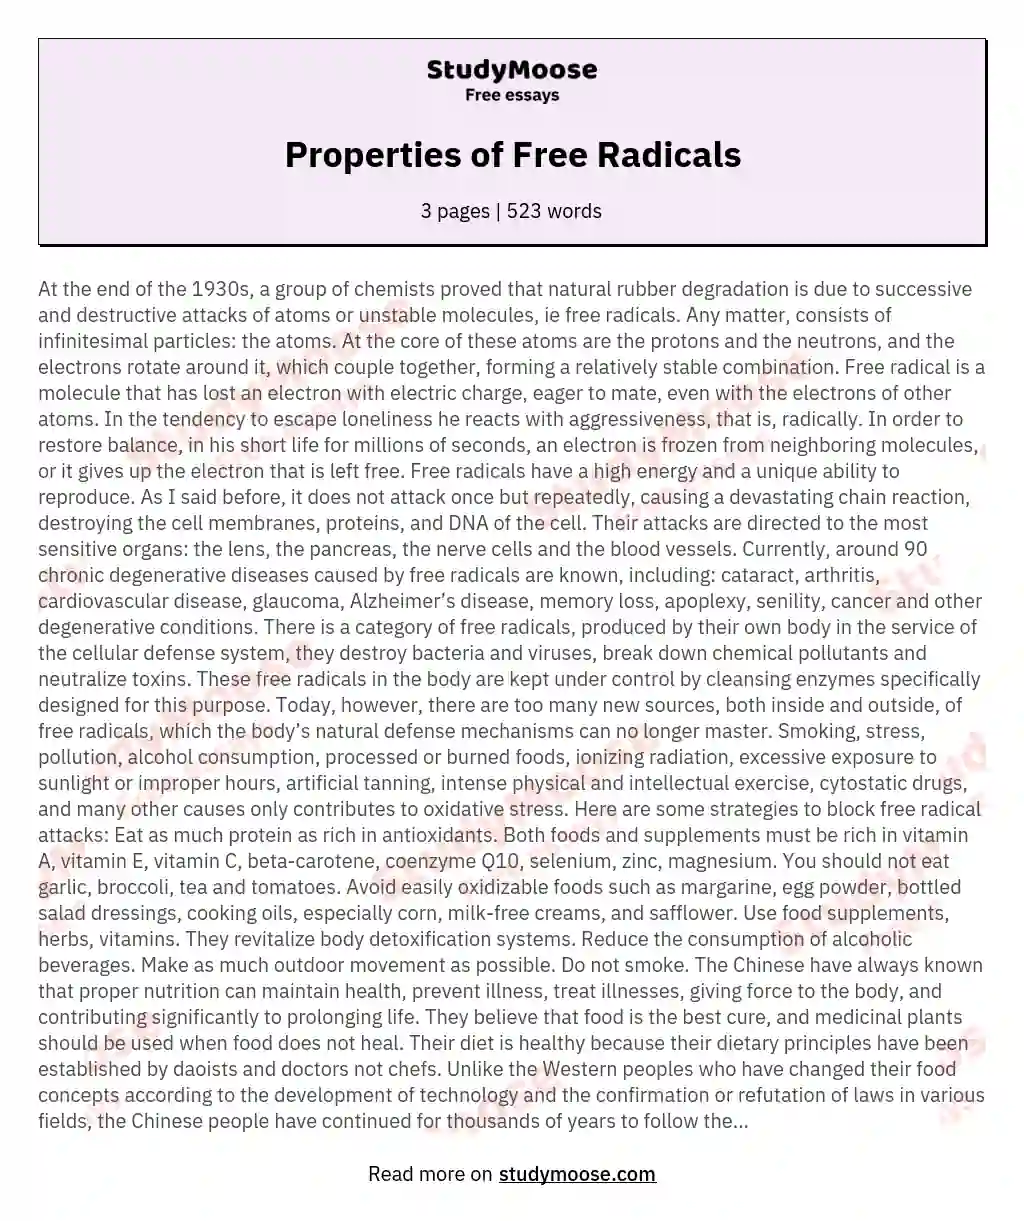 Properties of Free Radicals essay